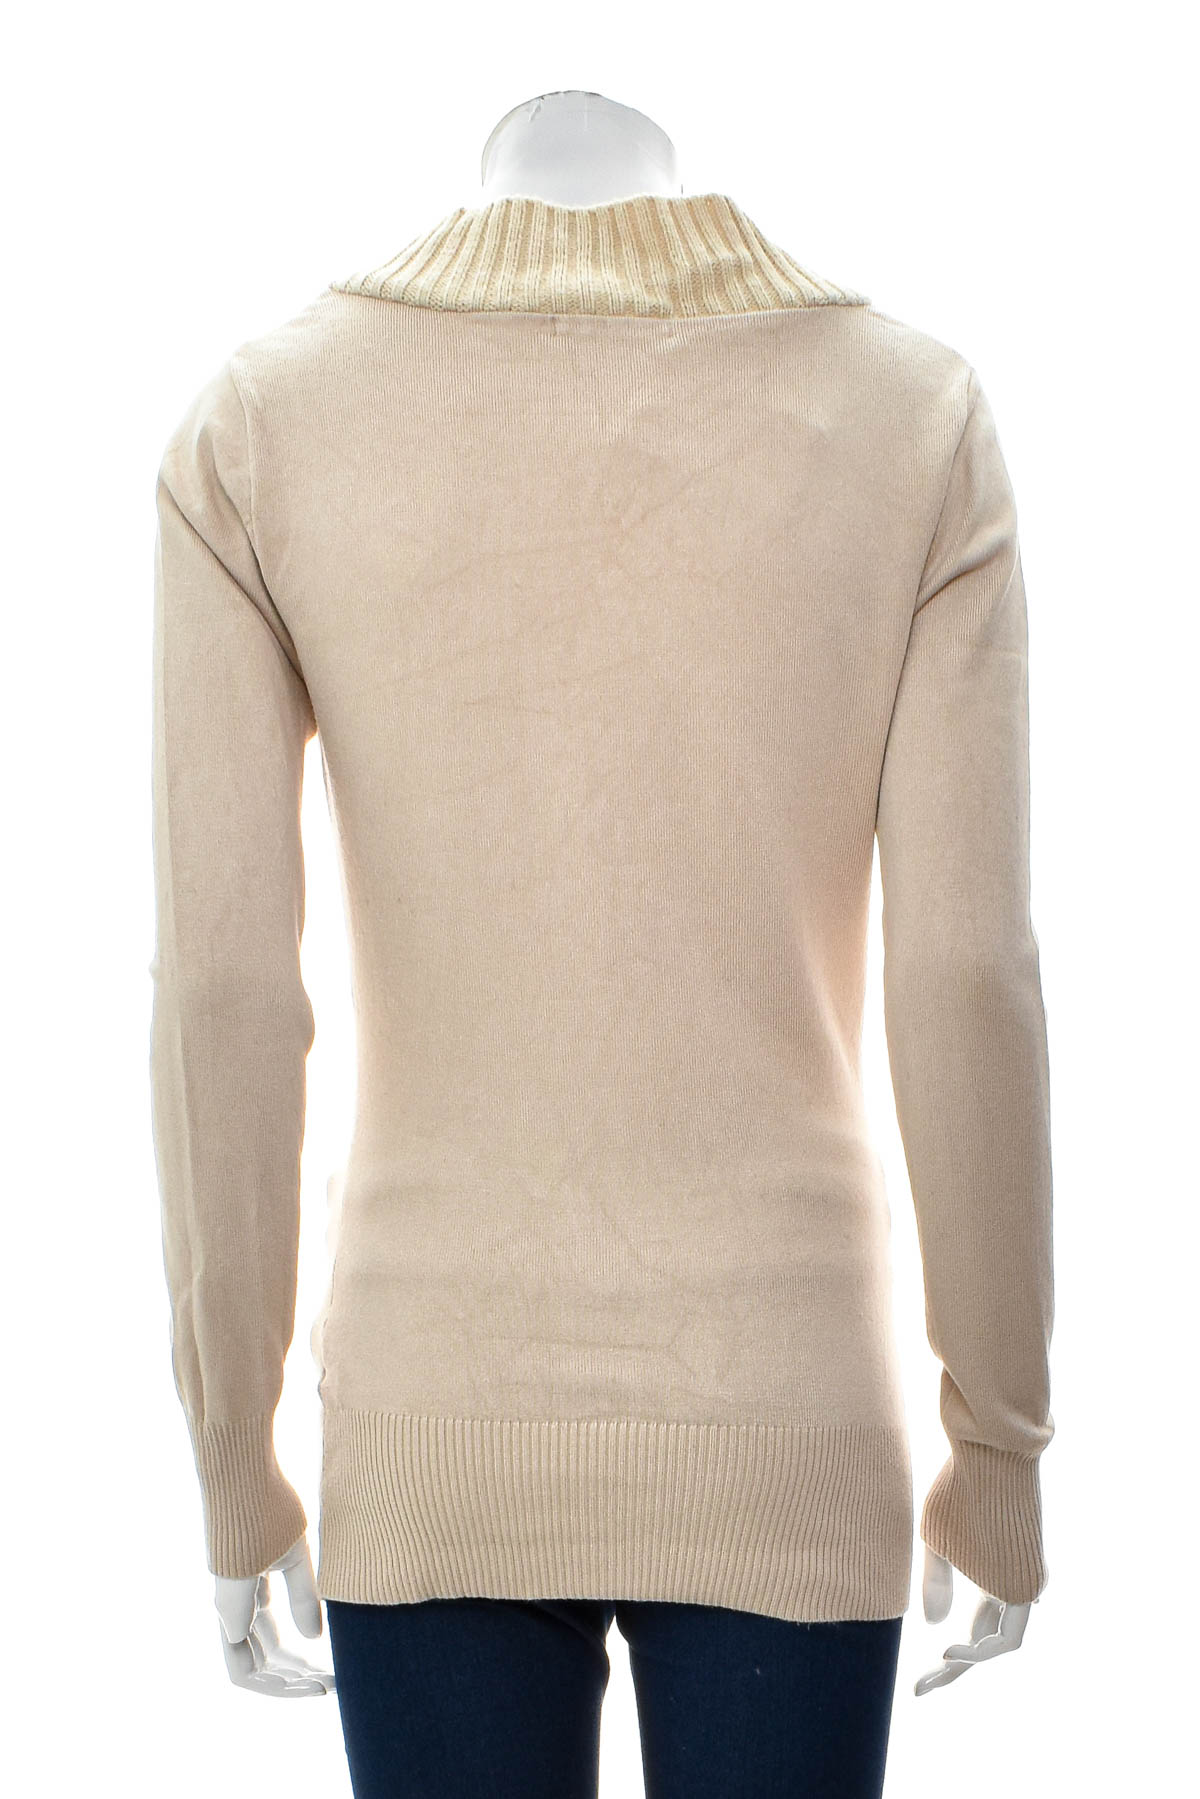 Women's sweater - Melrose - 1